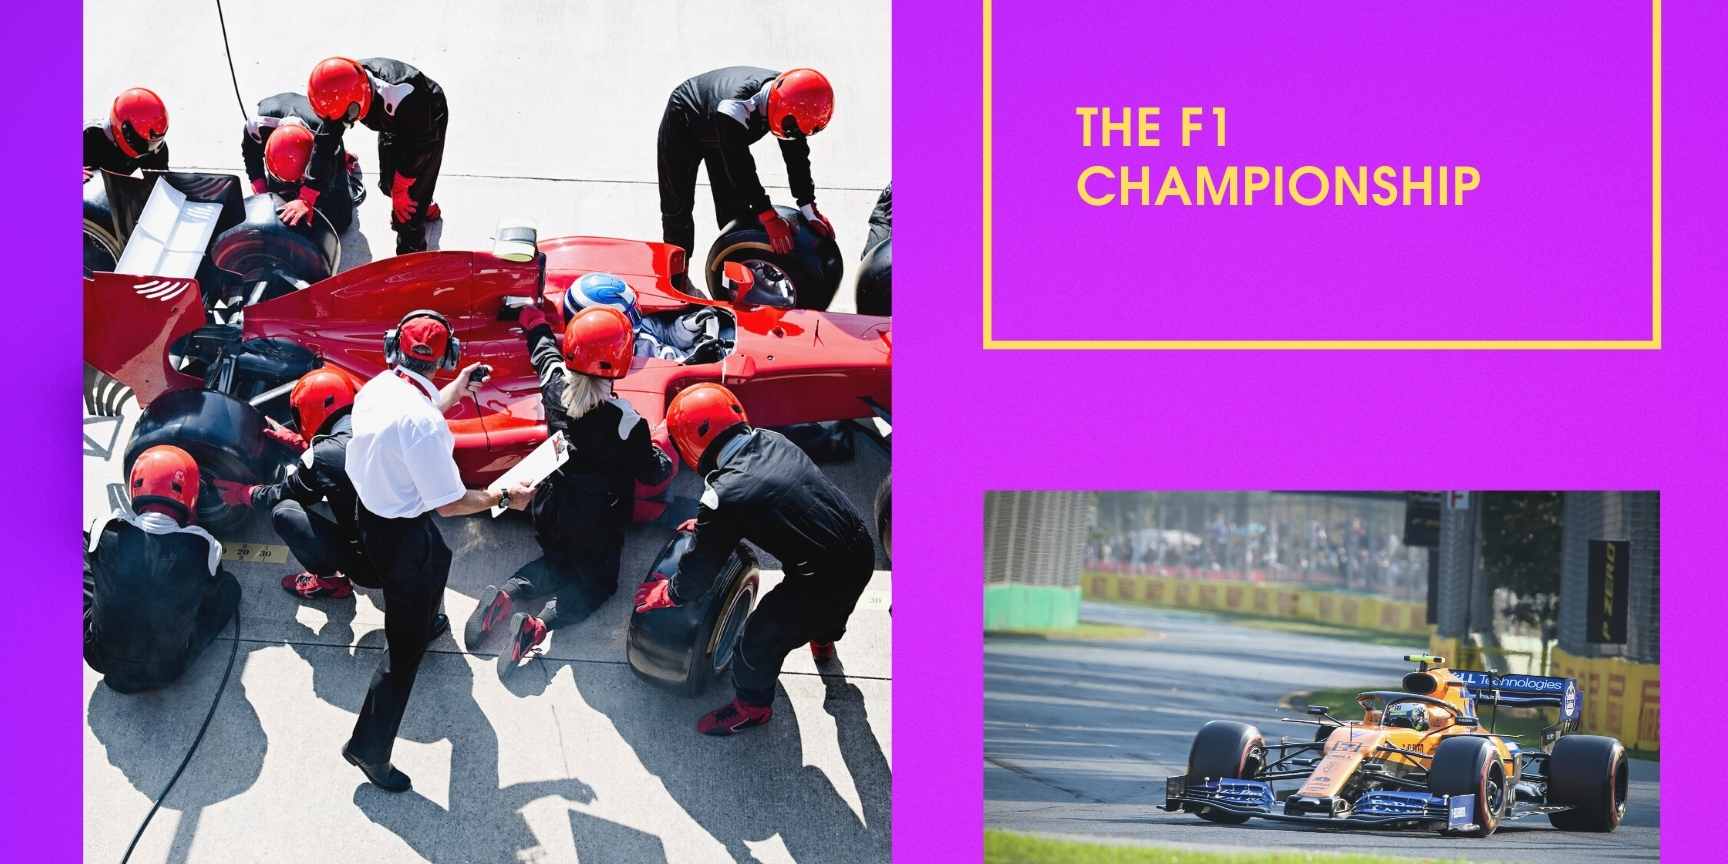 F1 championshiop